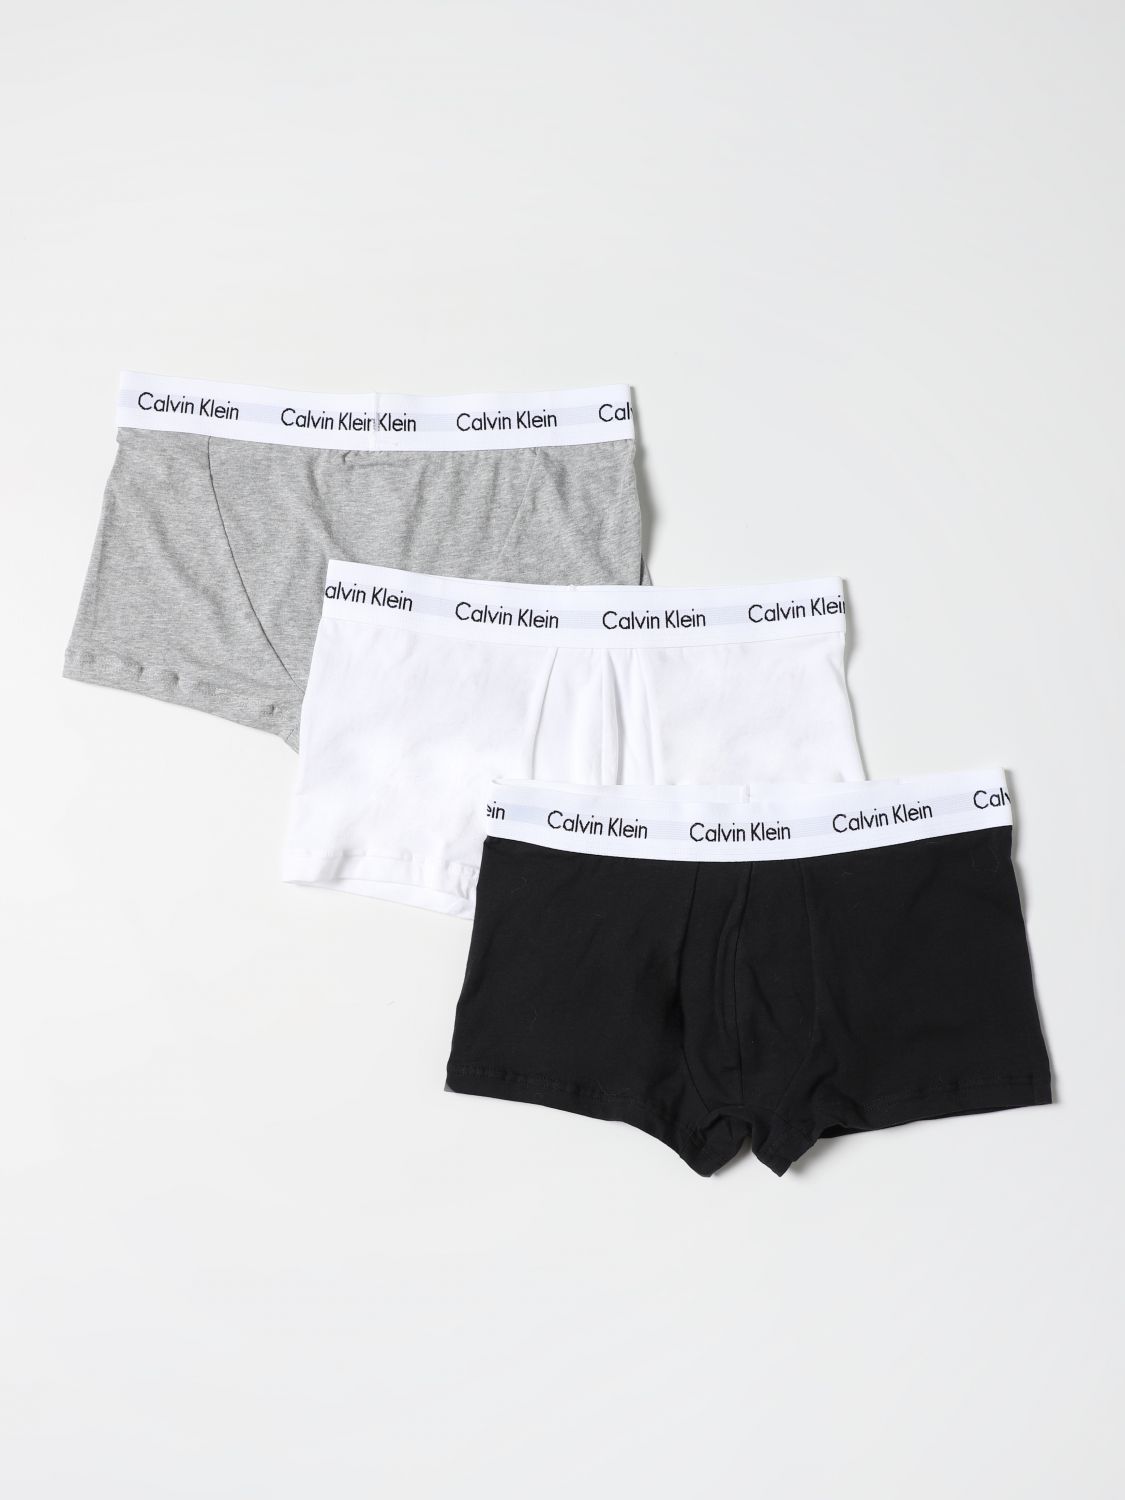 CALVIN KLEIN UNDERWEAR: Ropa interior para hombre, Gris Ropa Interior Calvin Klein Underwear en línea en GIGLIO.COM